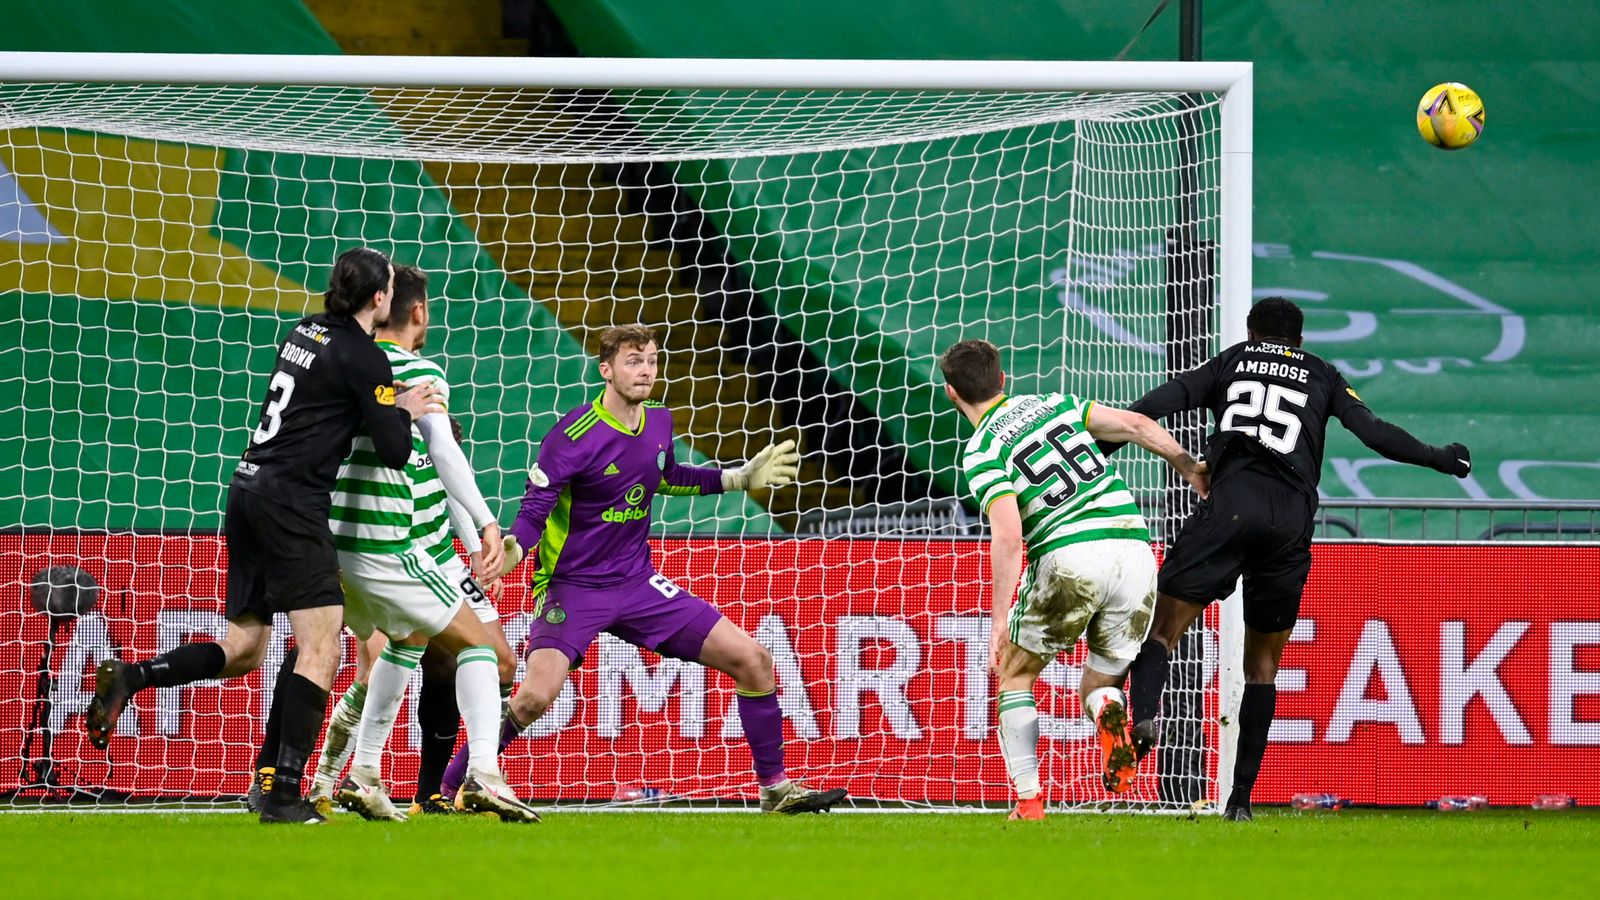 Celtic 0 - 0 Livingston - Match Report & Highlights